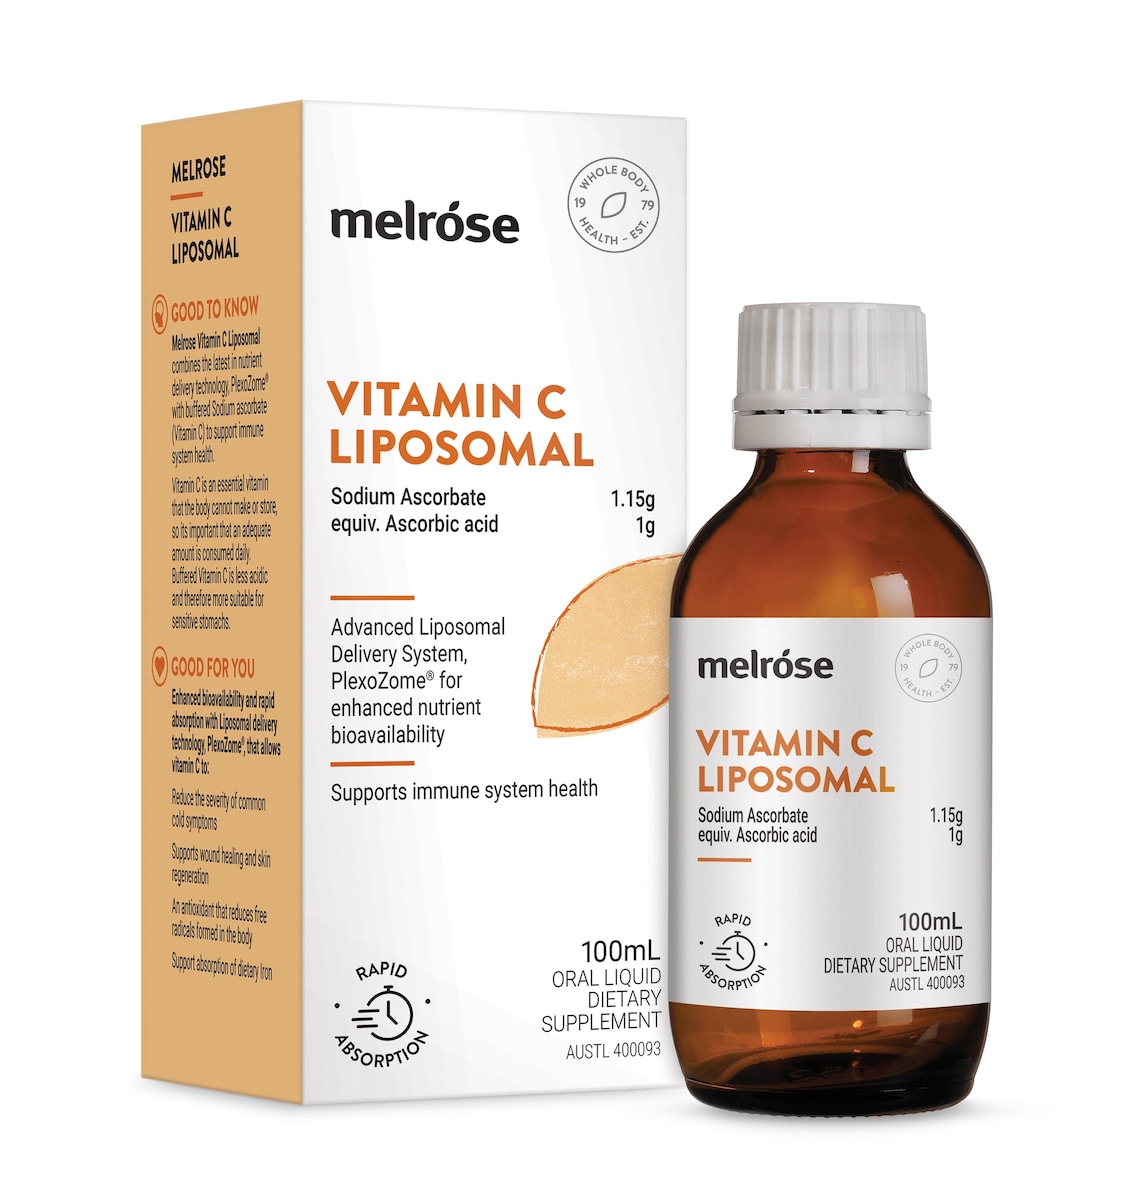 Melrose Liposomal Vitamin C Oral liquid 100mL